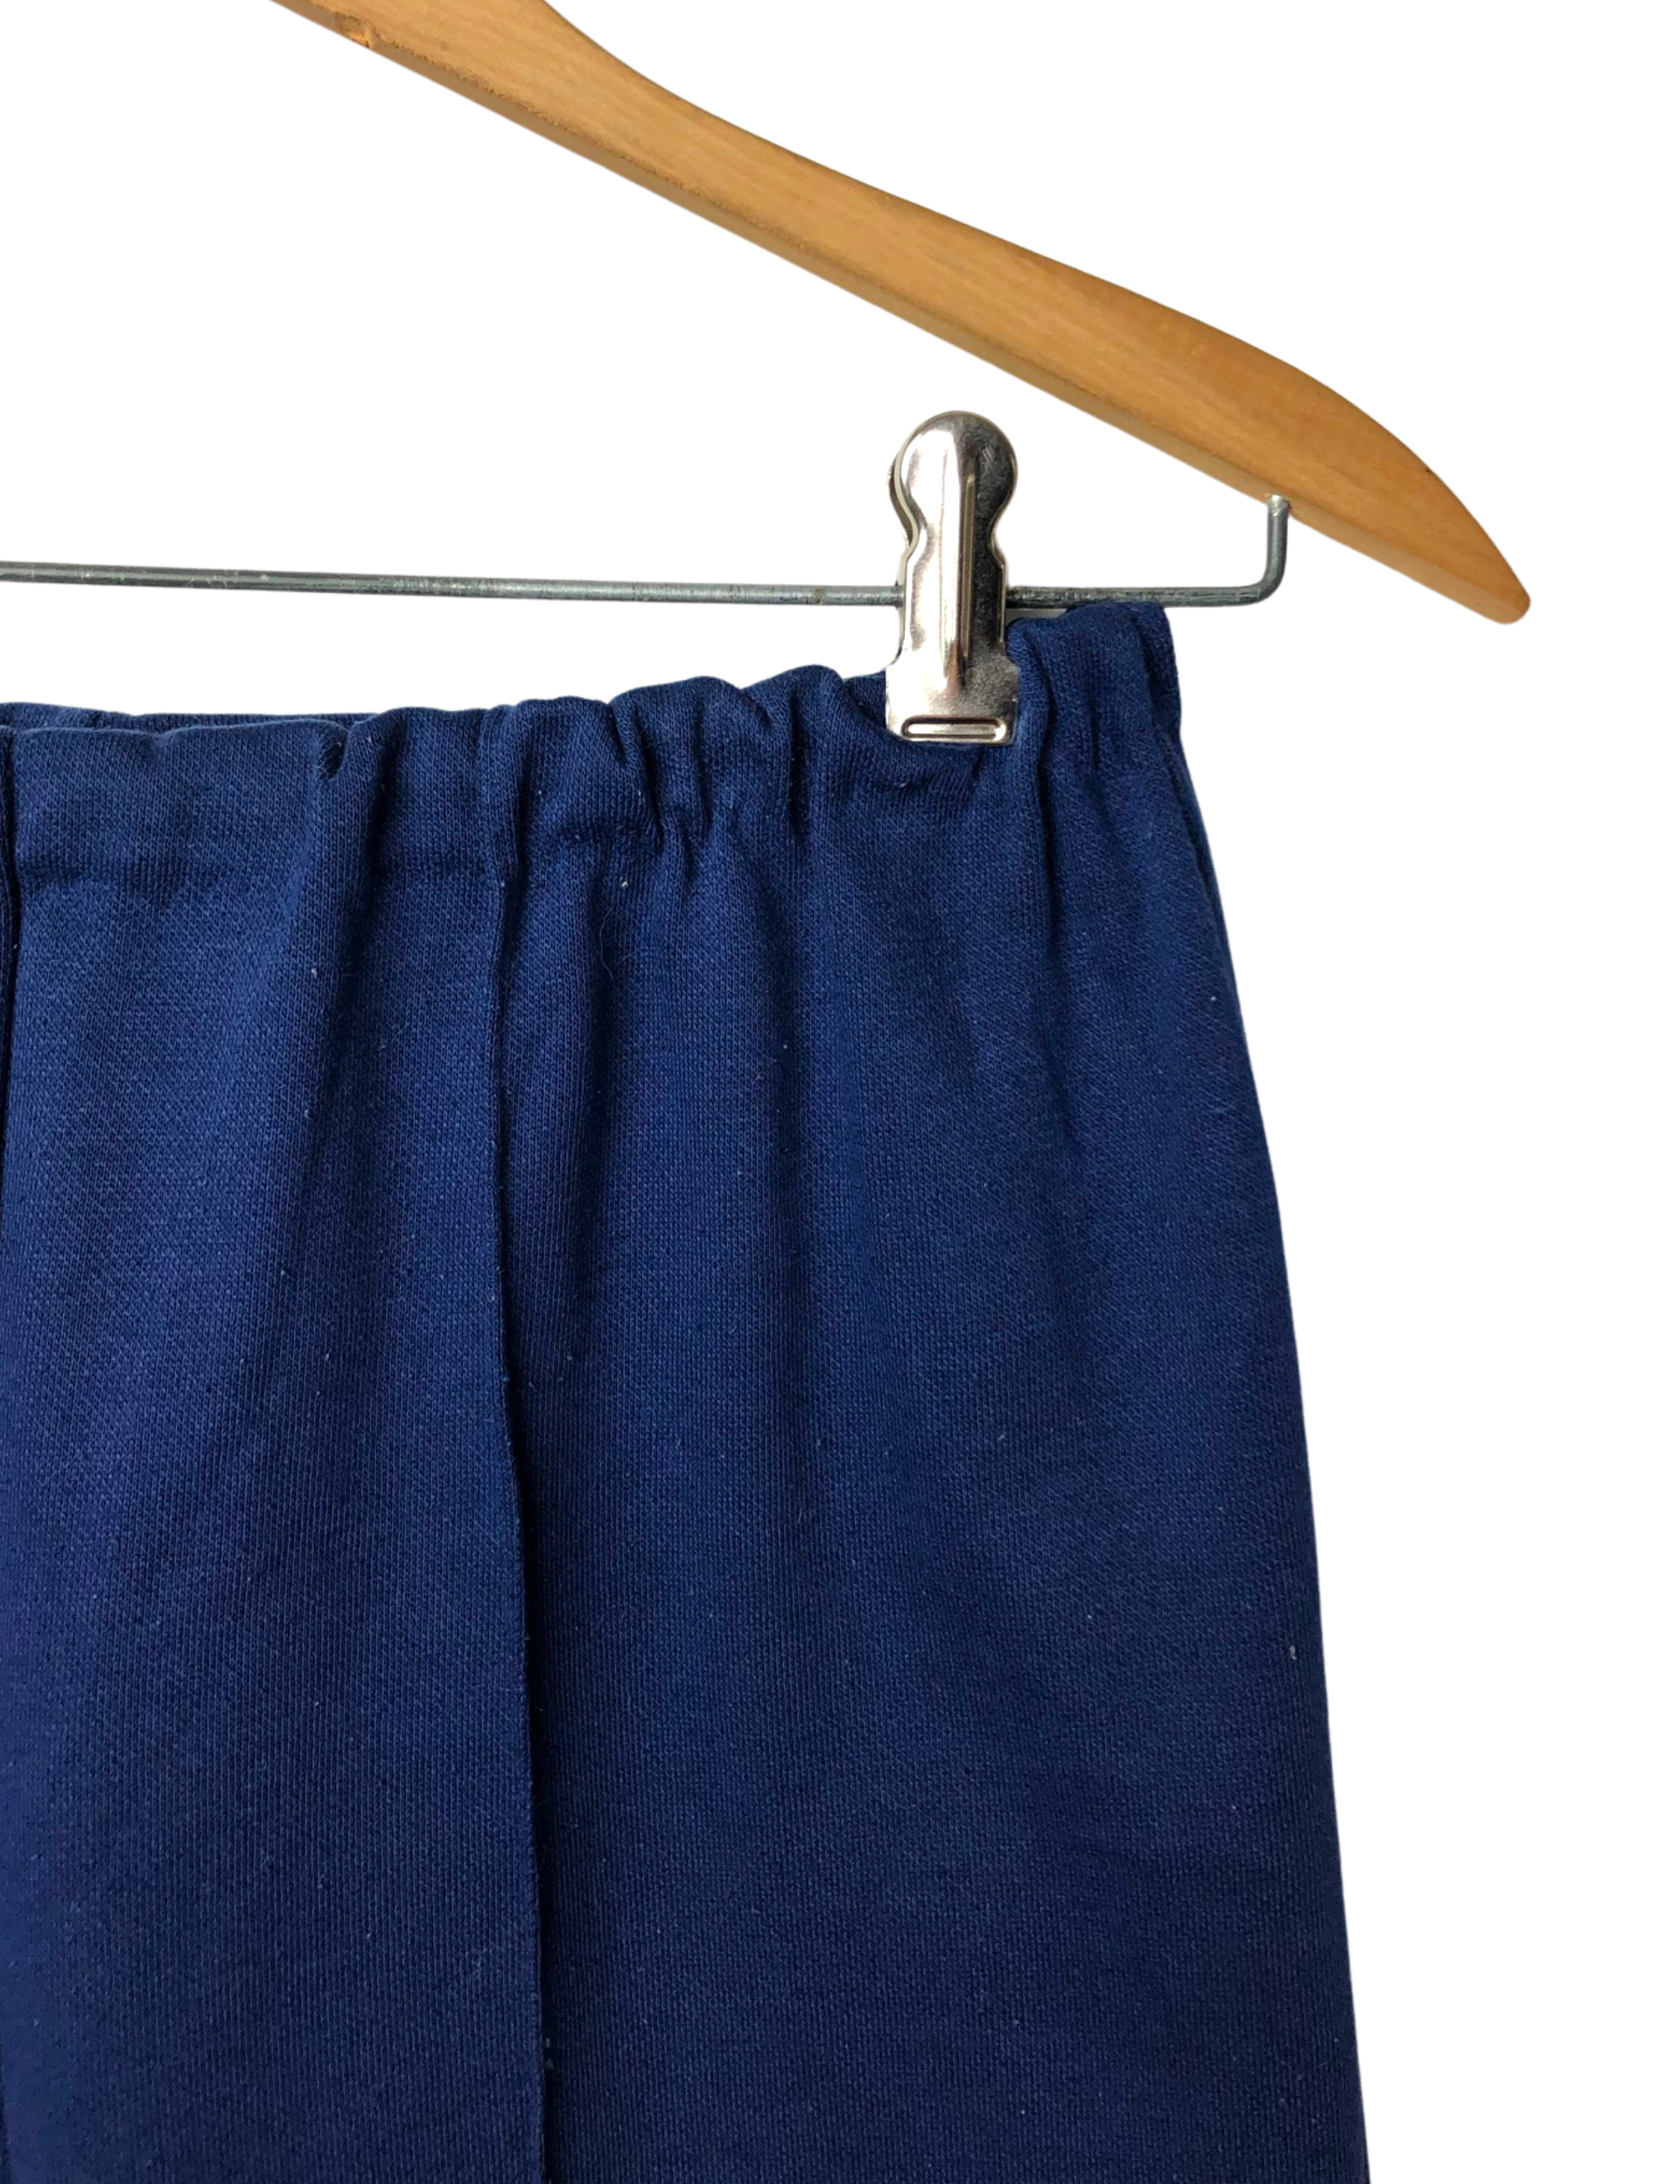 High waist vintage retro style short shorts in navy-blue